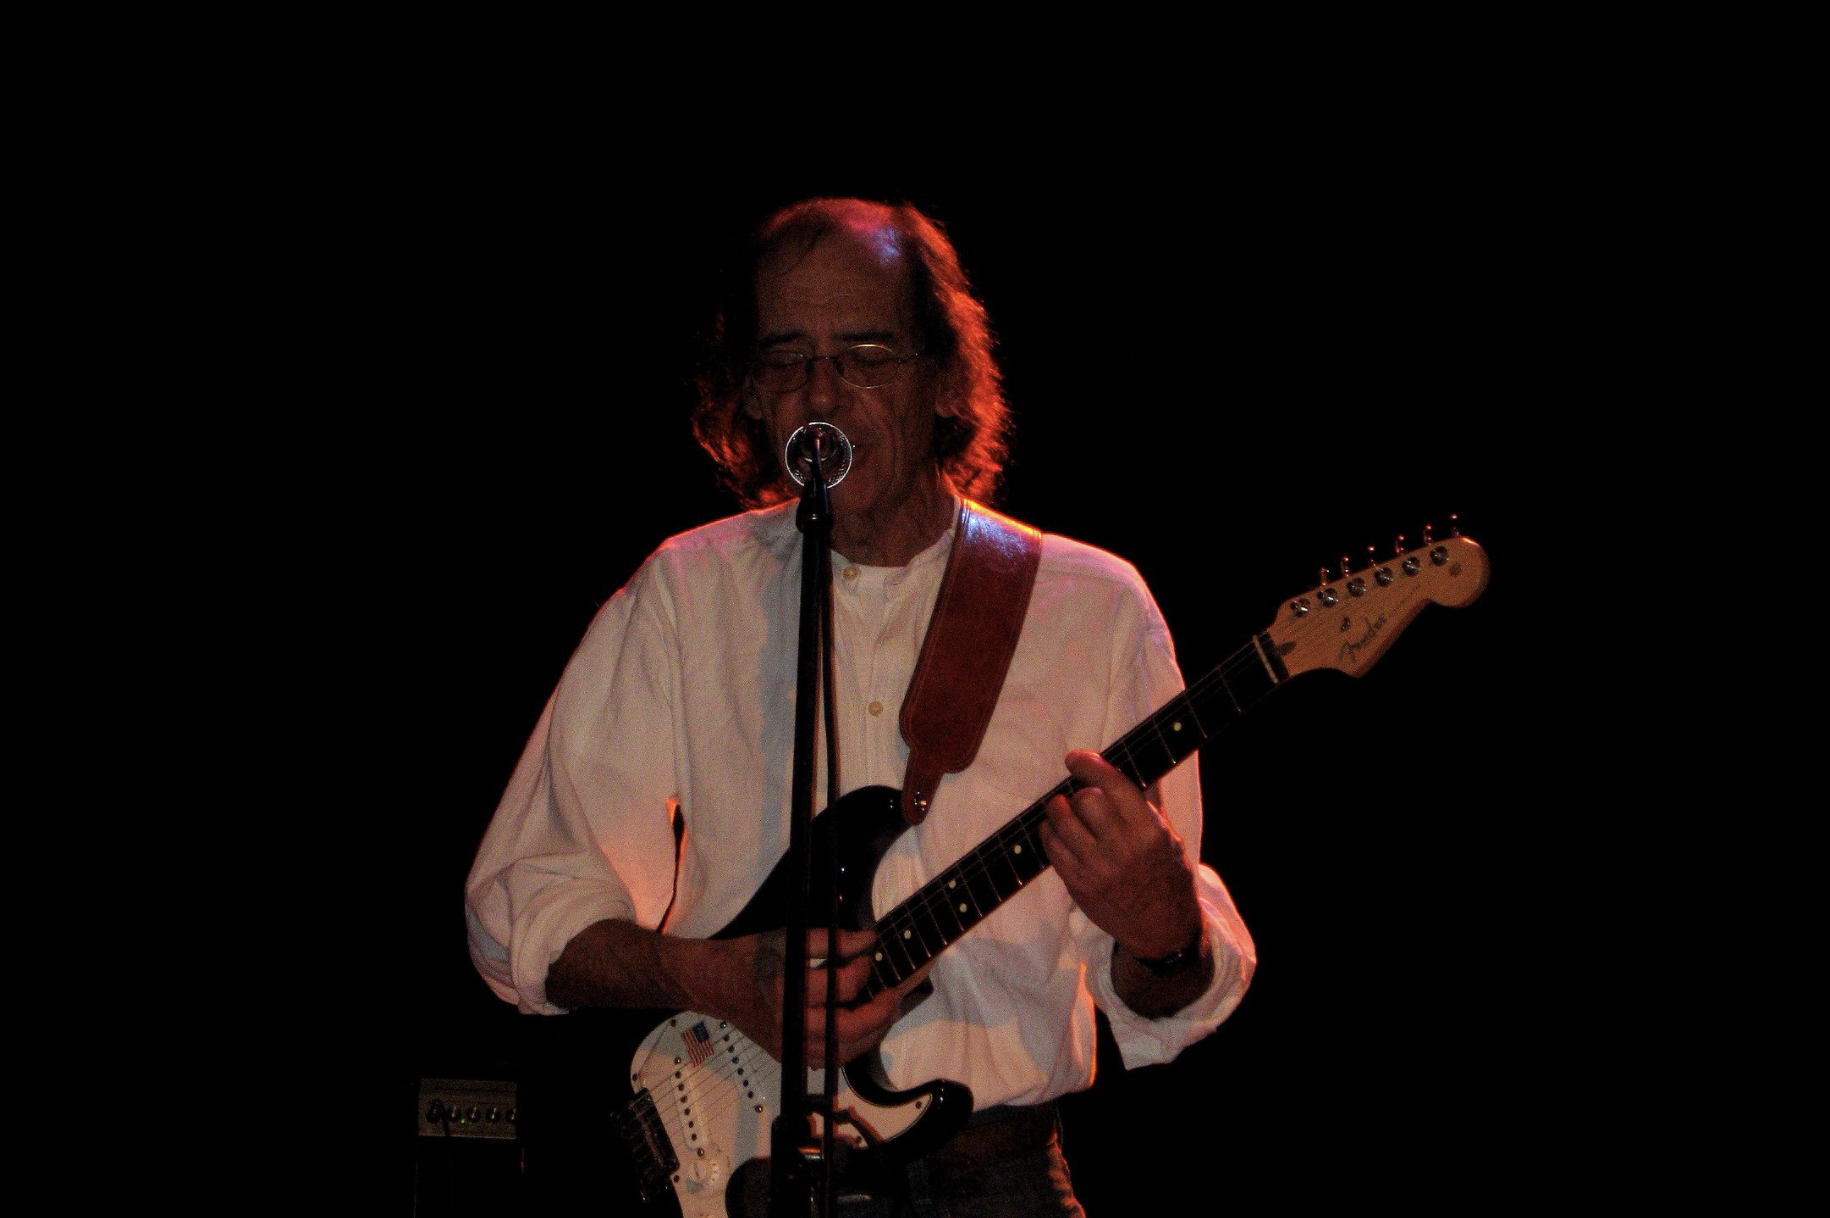 Luis Gil Pinedo, guitarra en ristre, en una imagen ya eterna.